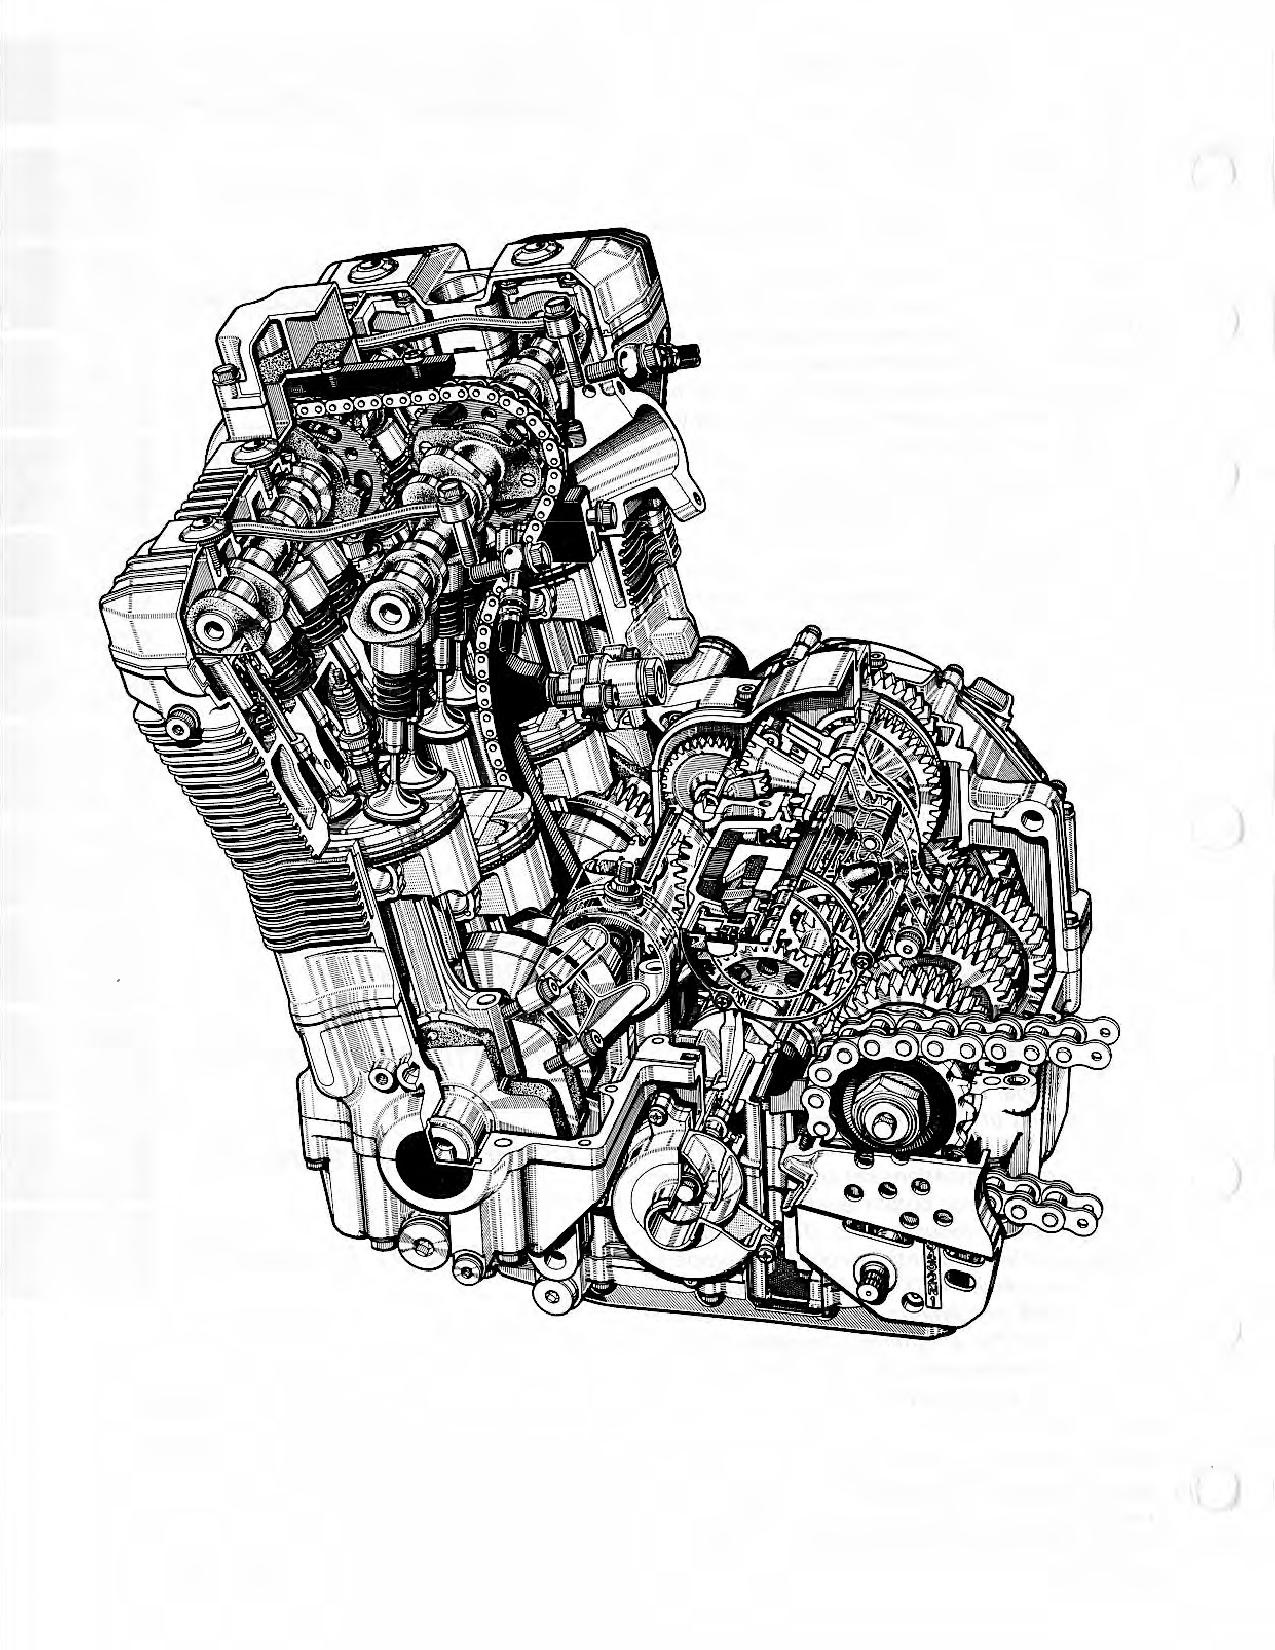 File:Suzuki GSX-R1100 1993-1998 Service Manual.pdf